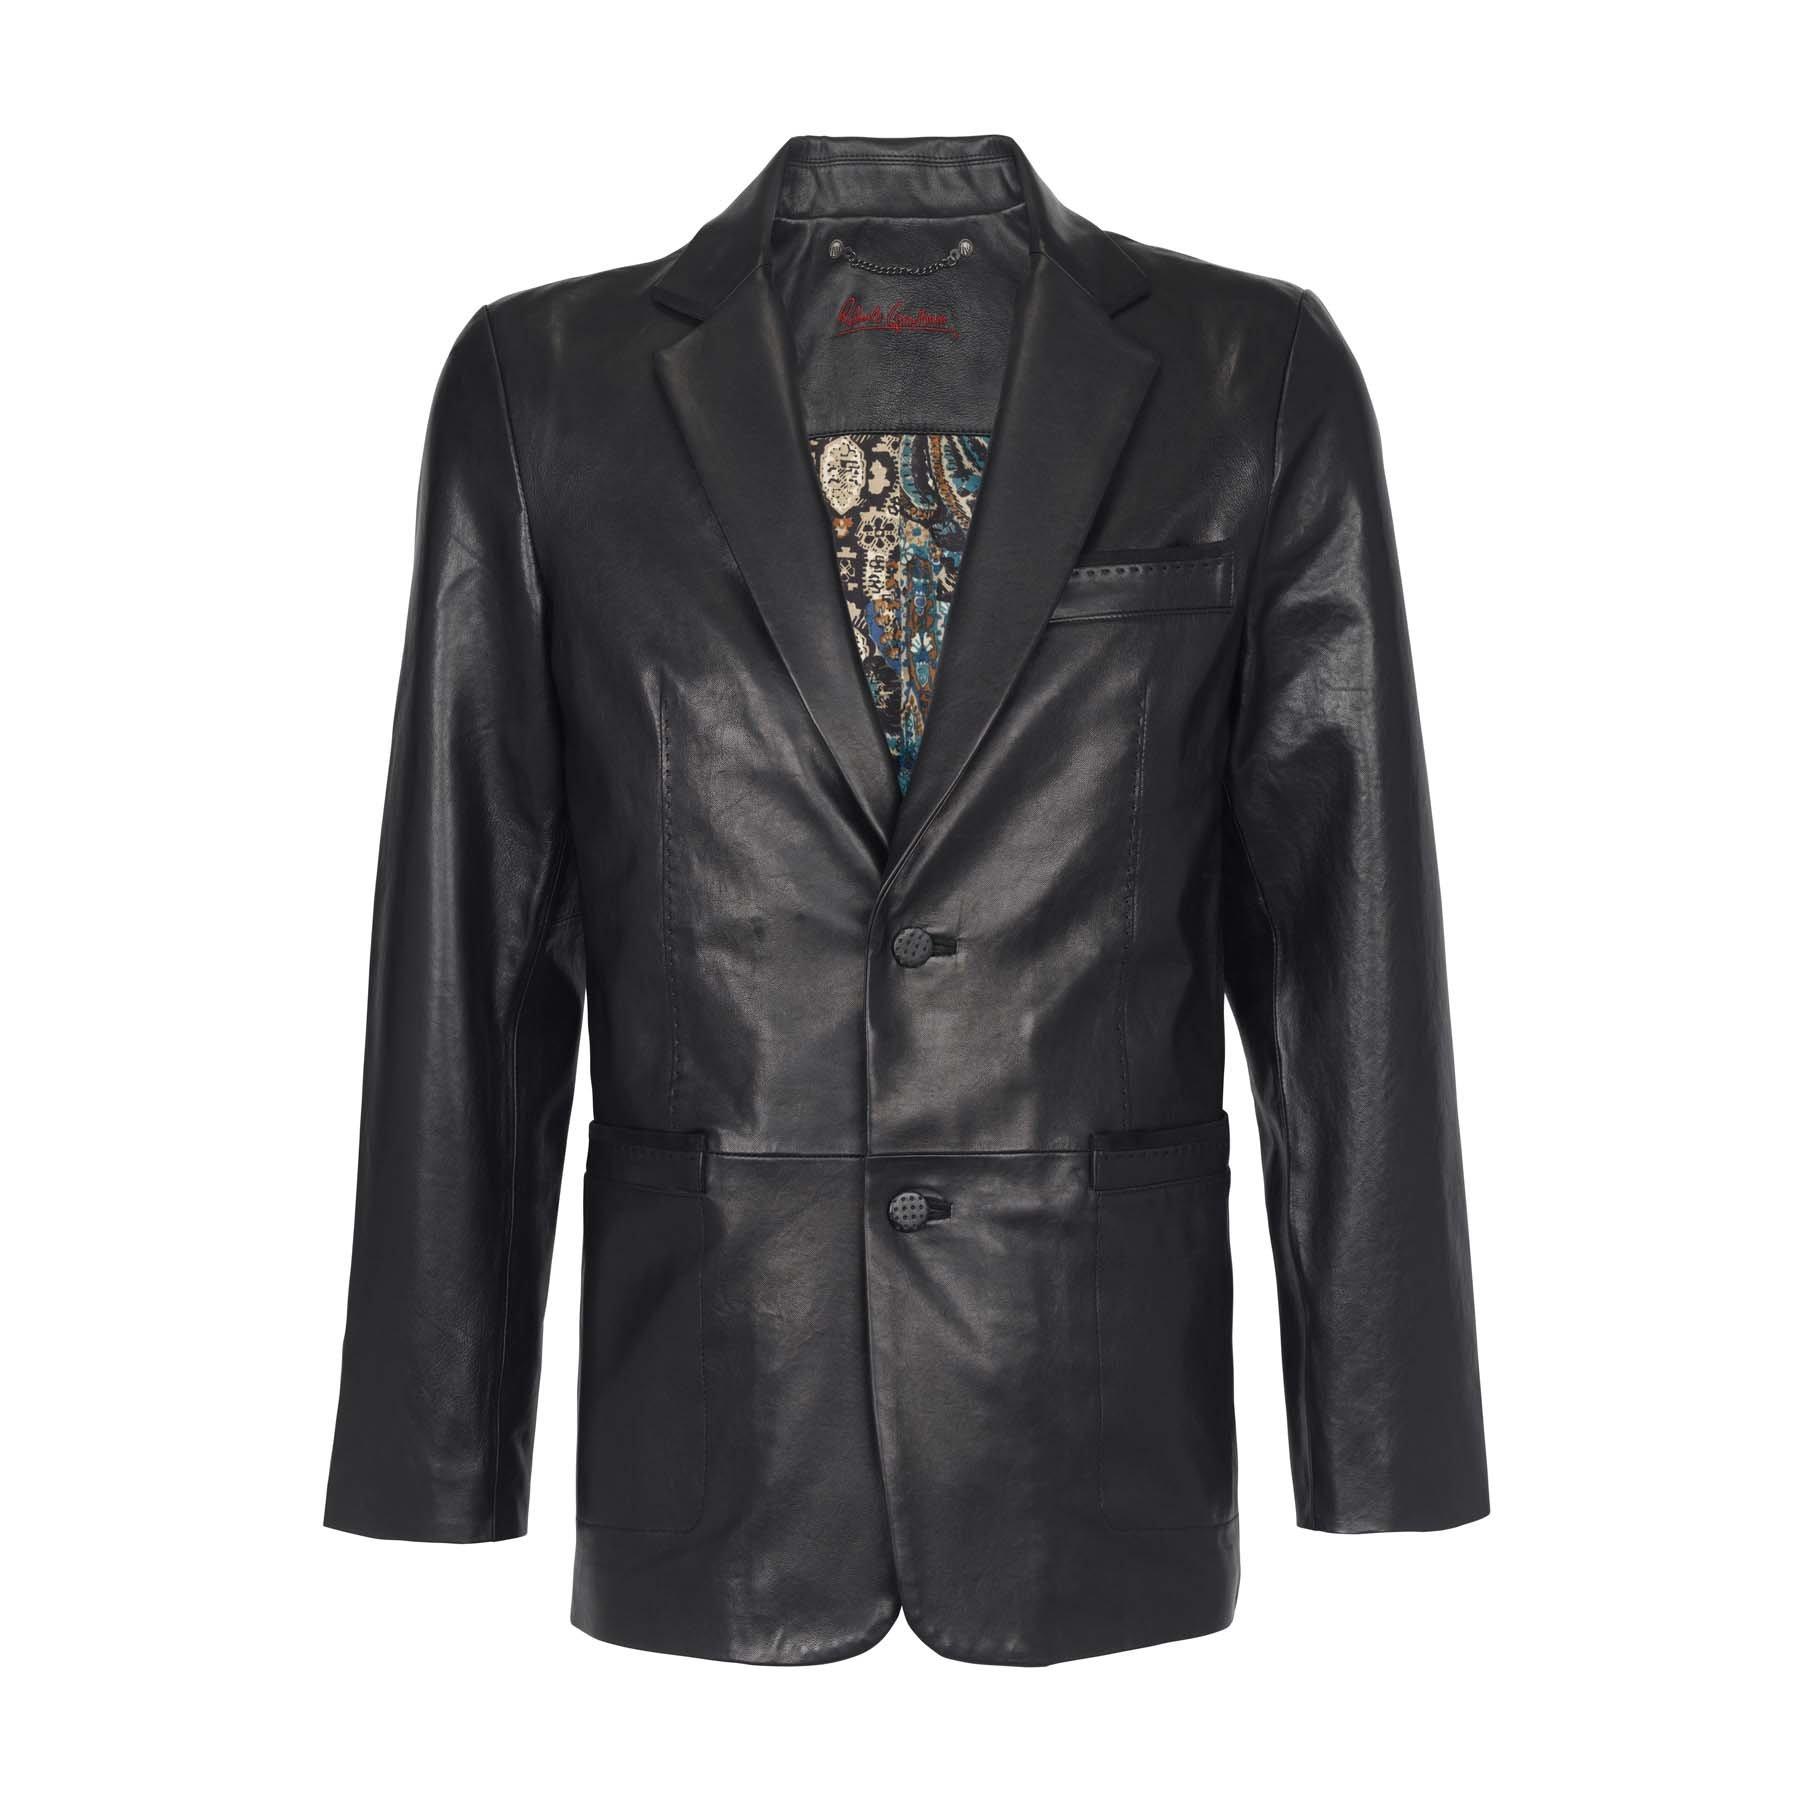 Robert Graham Turin Leather Jacket in Black for Men - Lyst